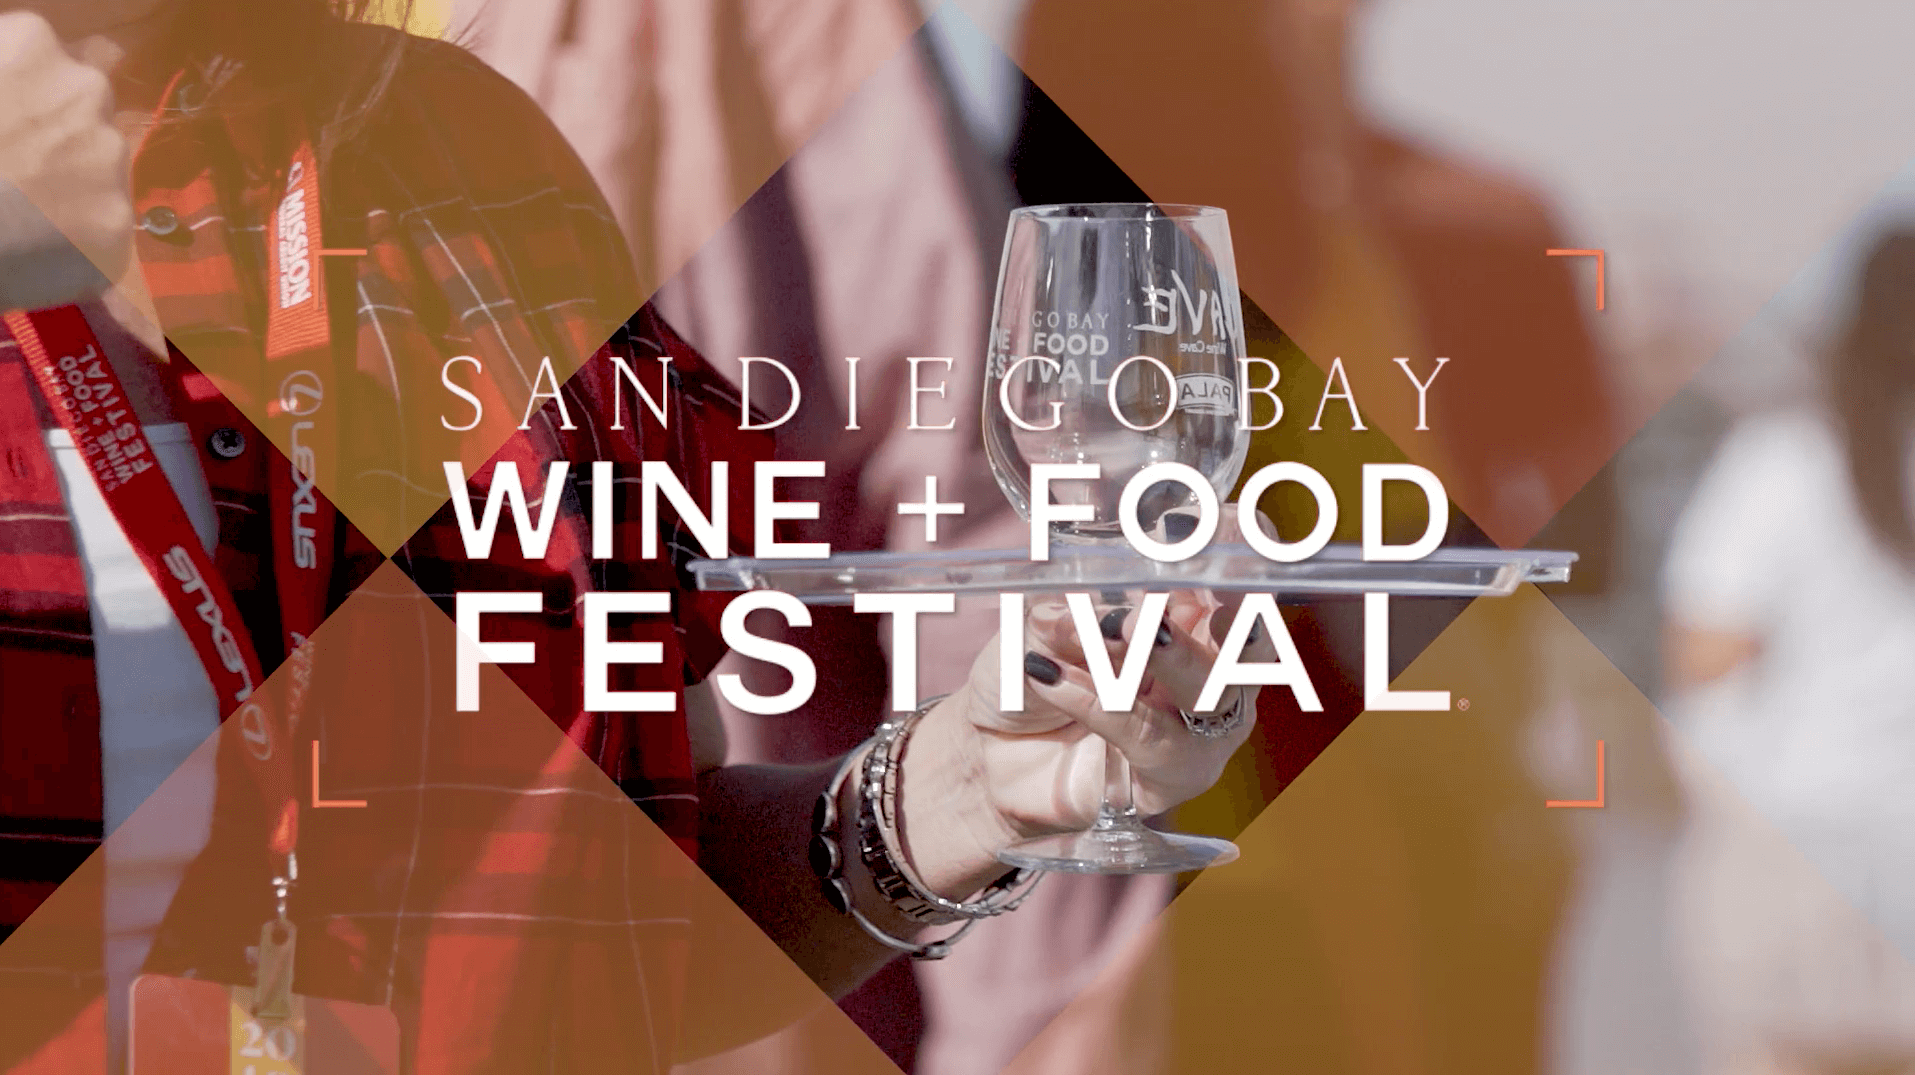 About San Diego Bay Wine & Food Festival®